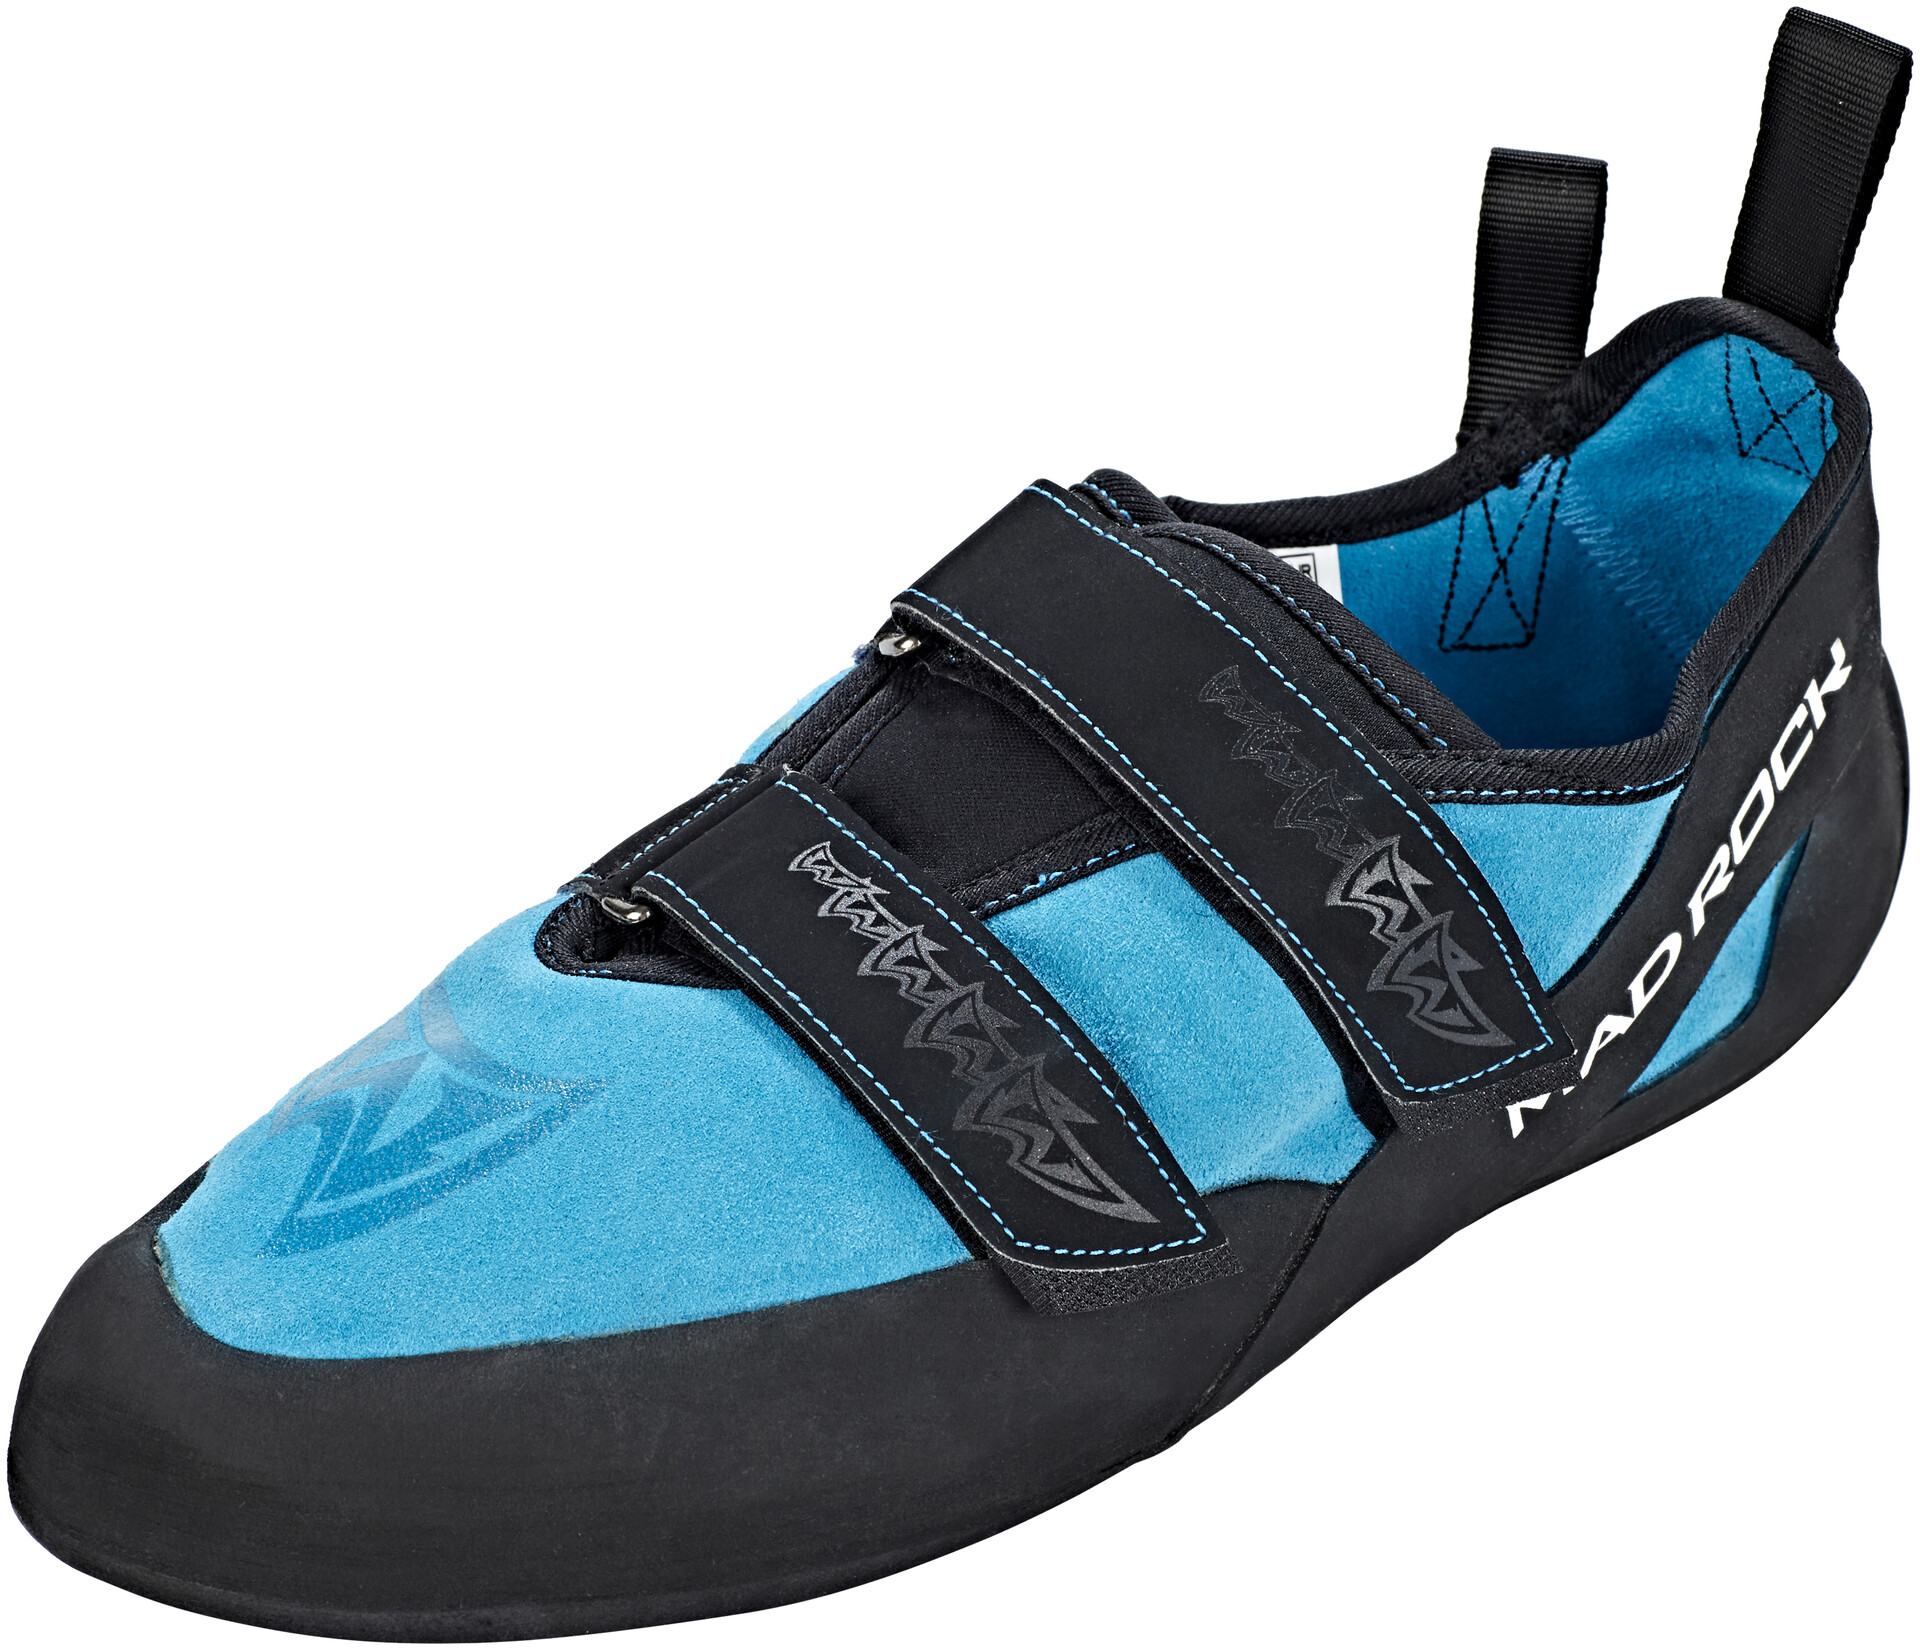 Mad Rock Drifter Climbing Shoes blue at 